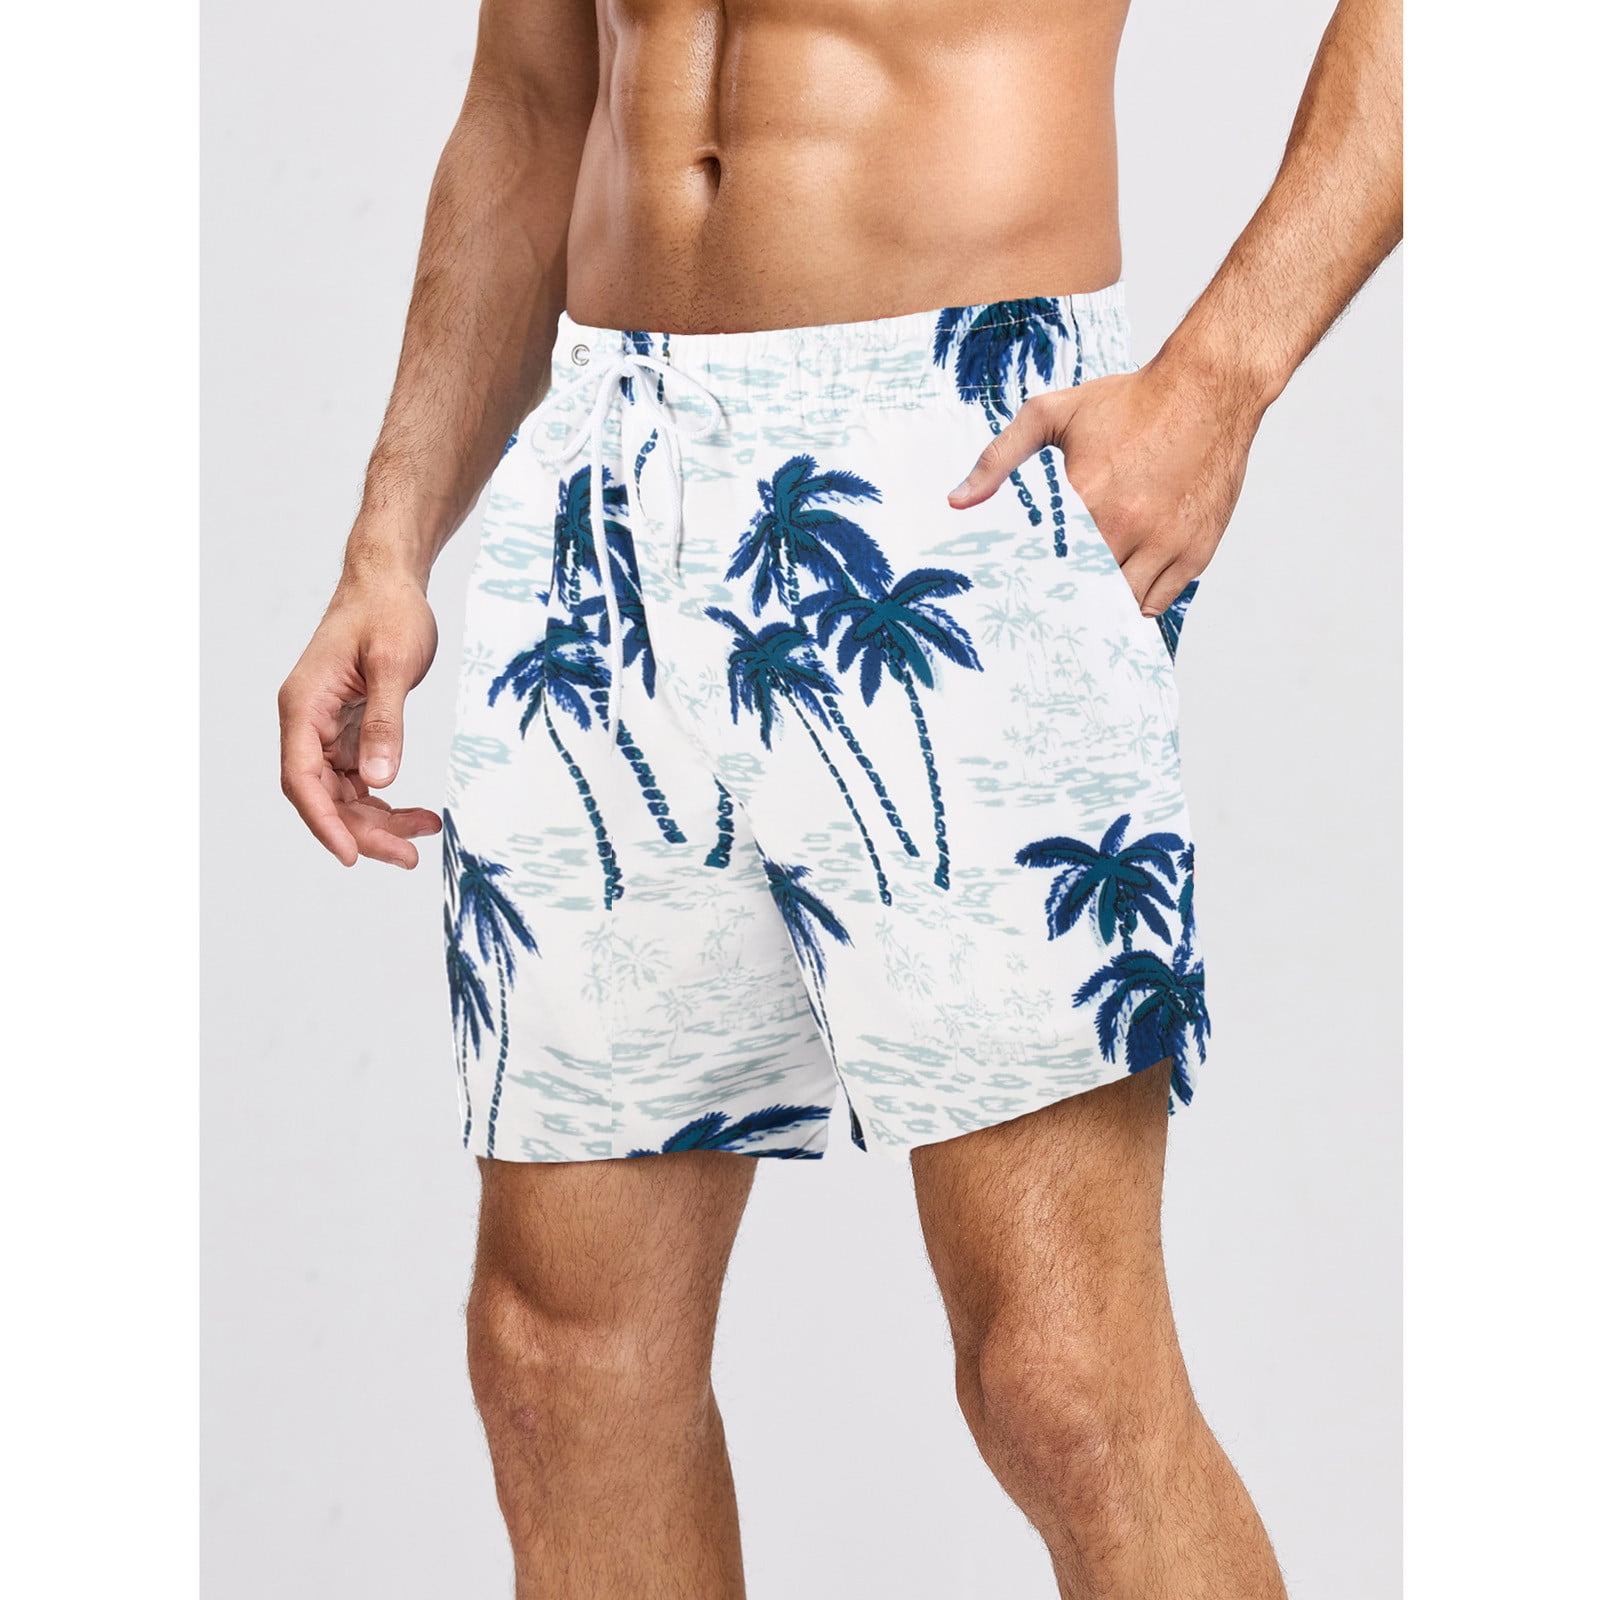 Buy Generic White, L : Beach Board Shorts Men Swim Shorts Swimwear Swimming  Trunks Man Bermudas Surf Boardshort Sport Suits Beachwear with Mesh Lining  Online at Low Prices in India 